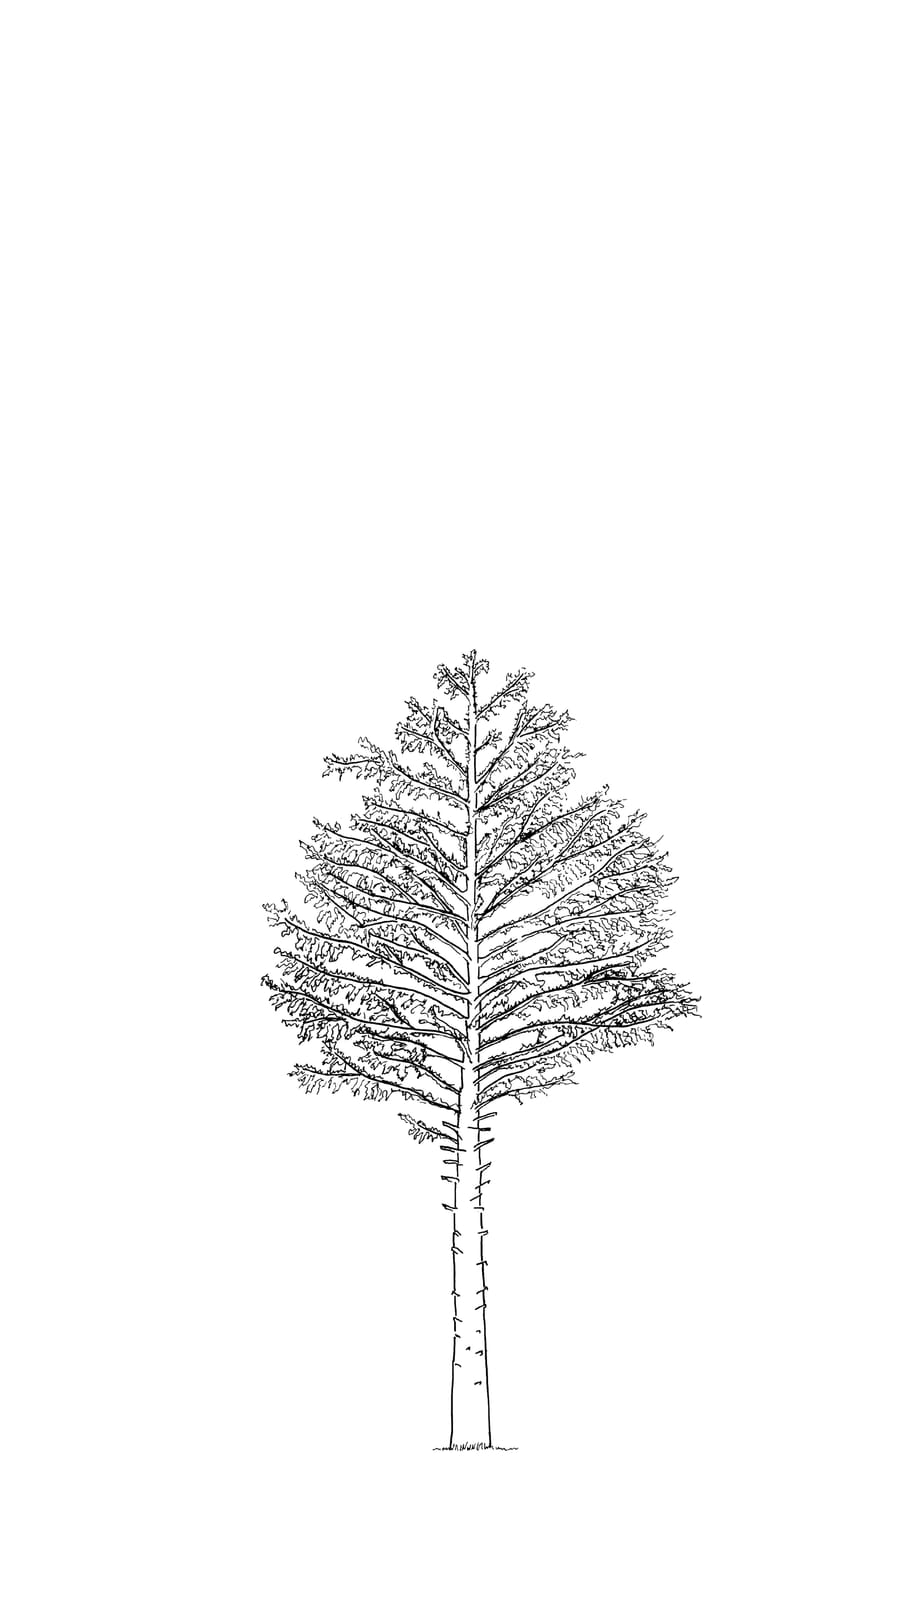 Black line sketch of a 25 year old douglas fir tree